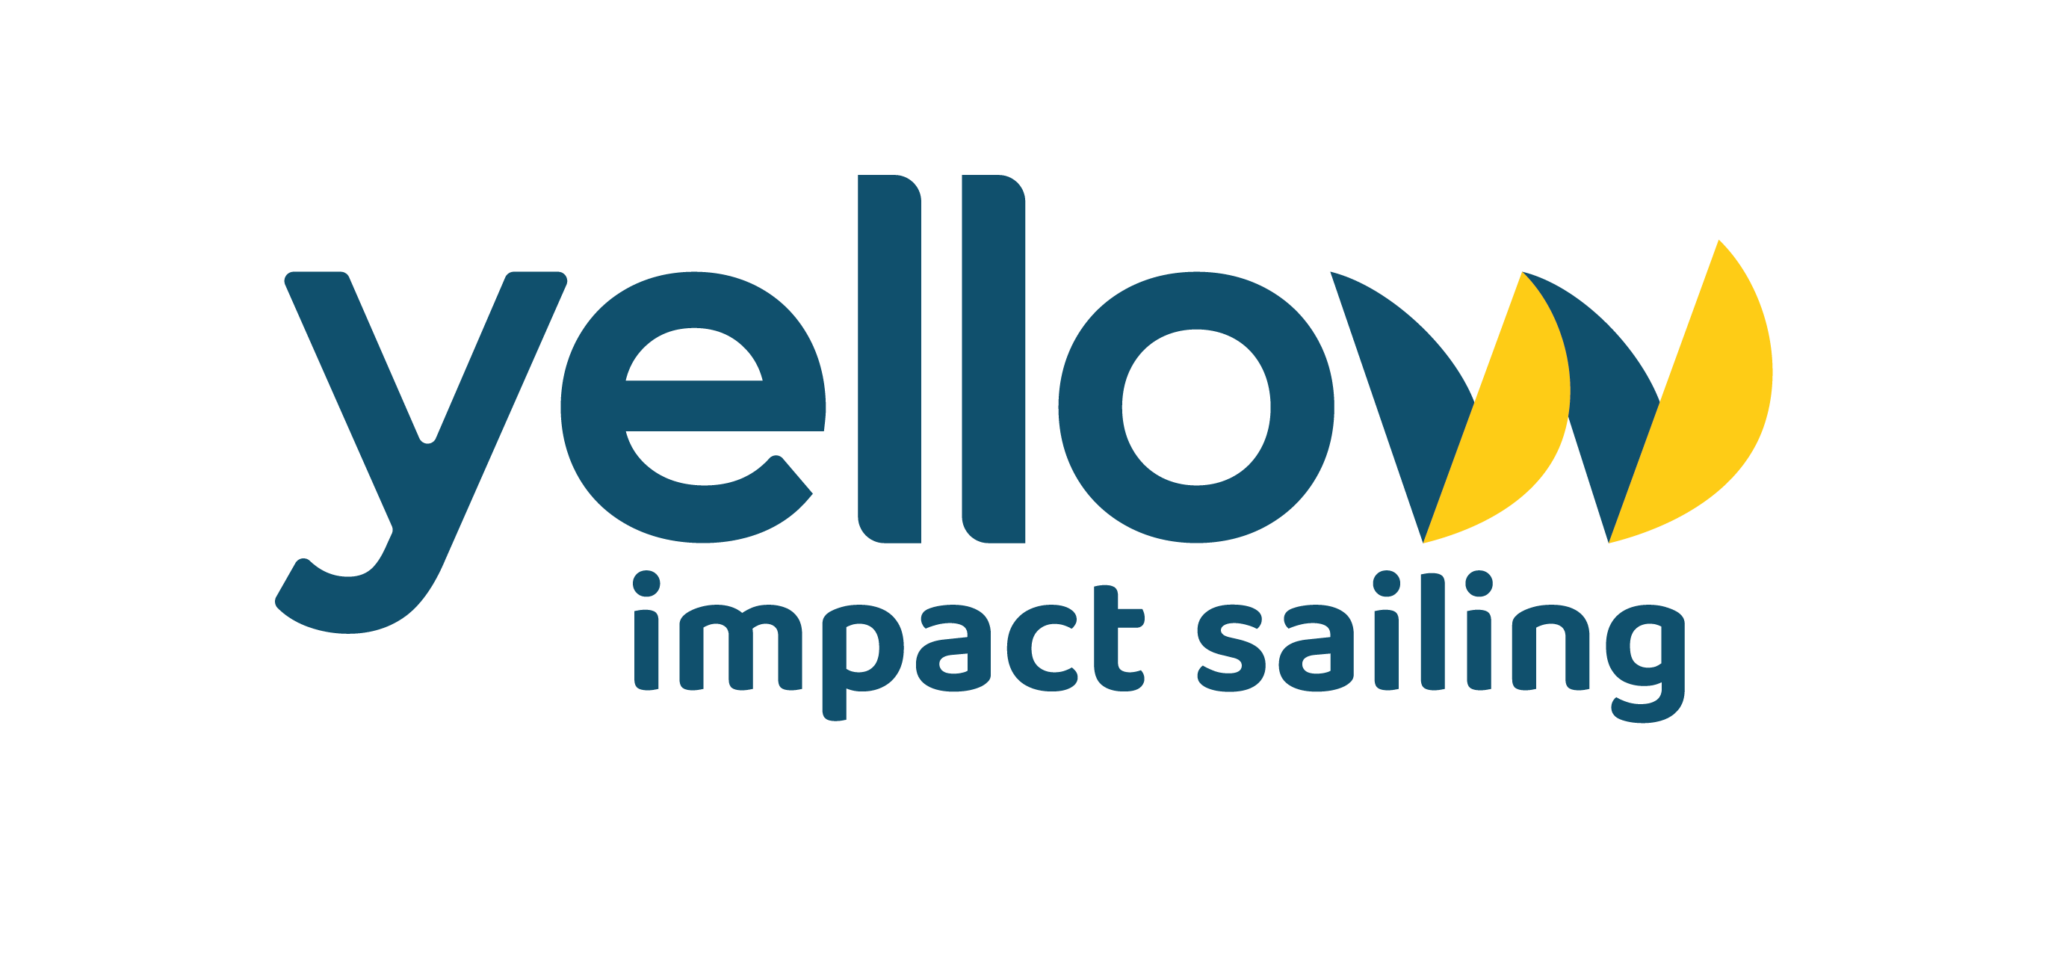 https://yellow-impactsailing.com/